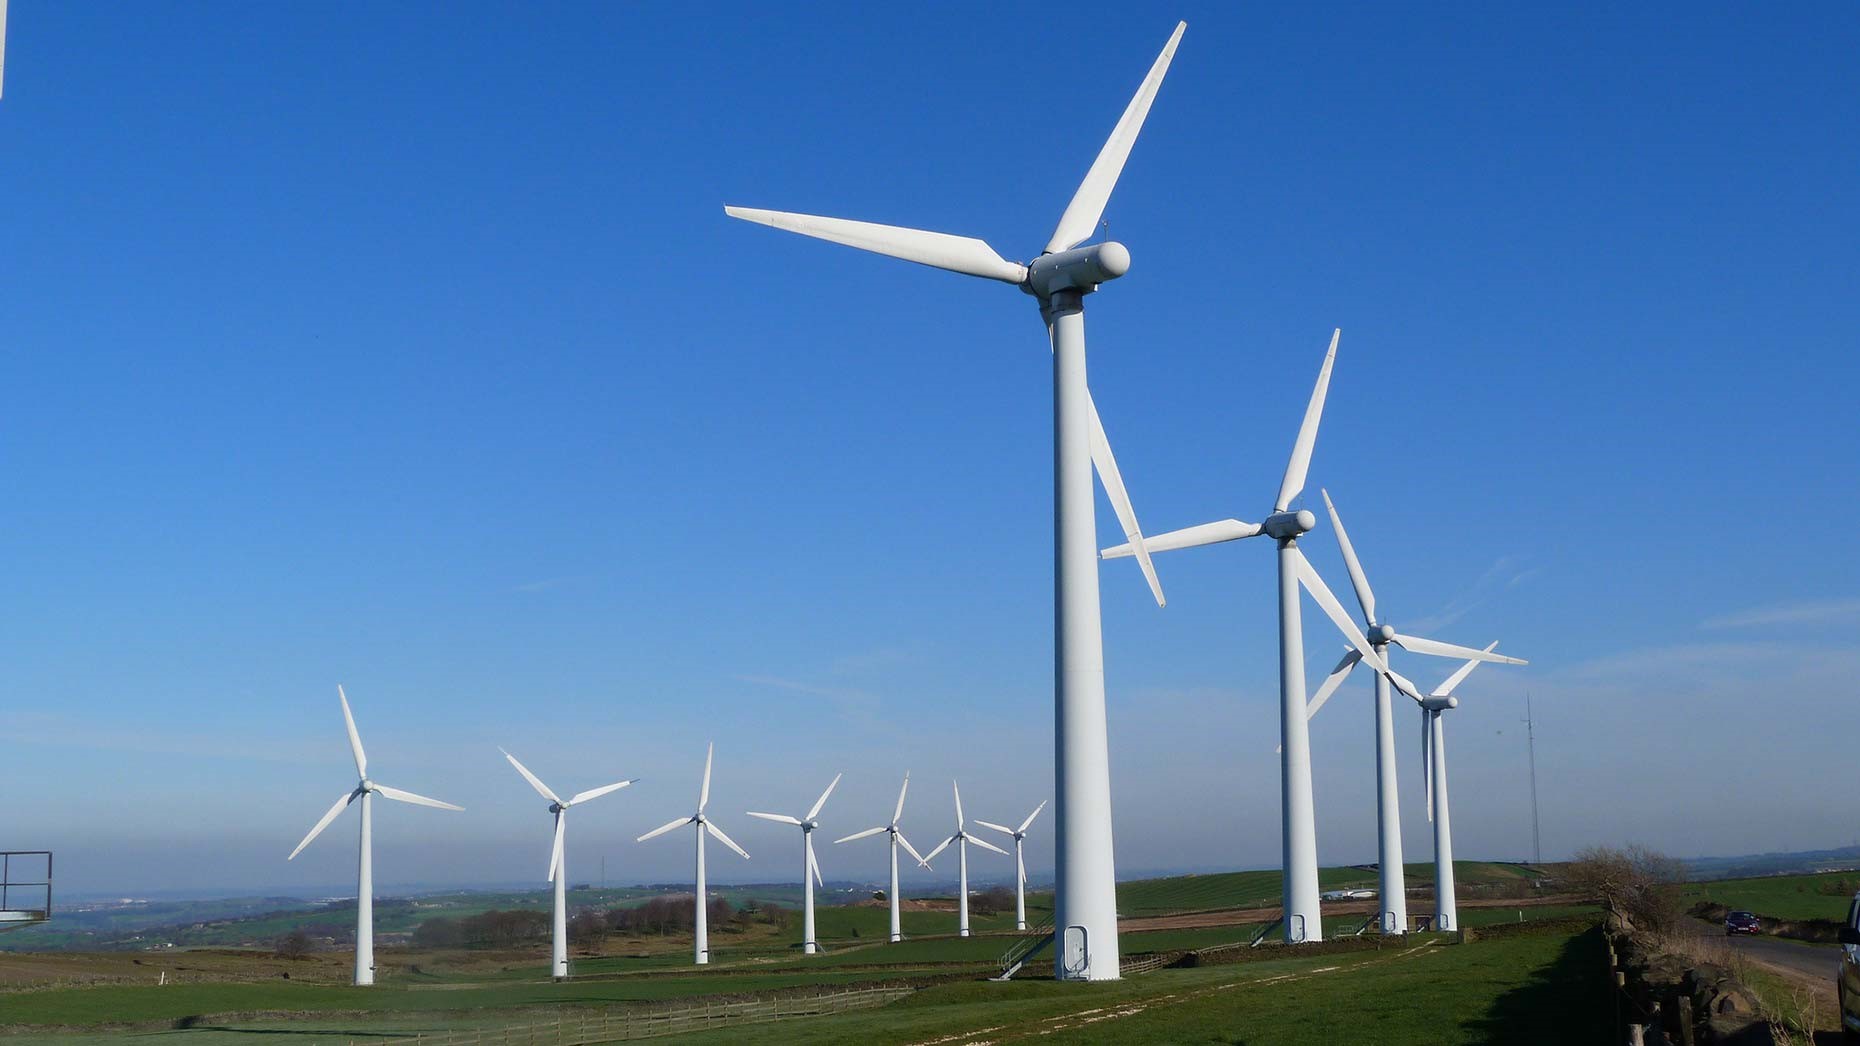 Morgan Schaffer Calistos DGA - Samca Wind Farm